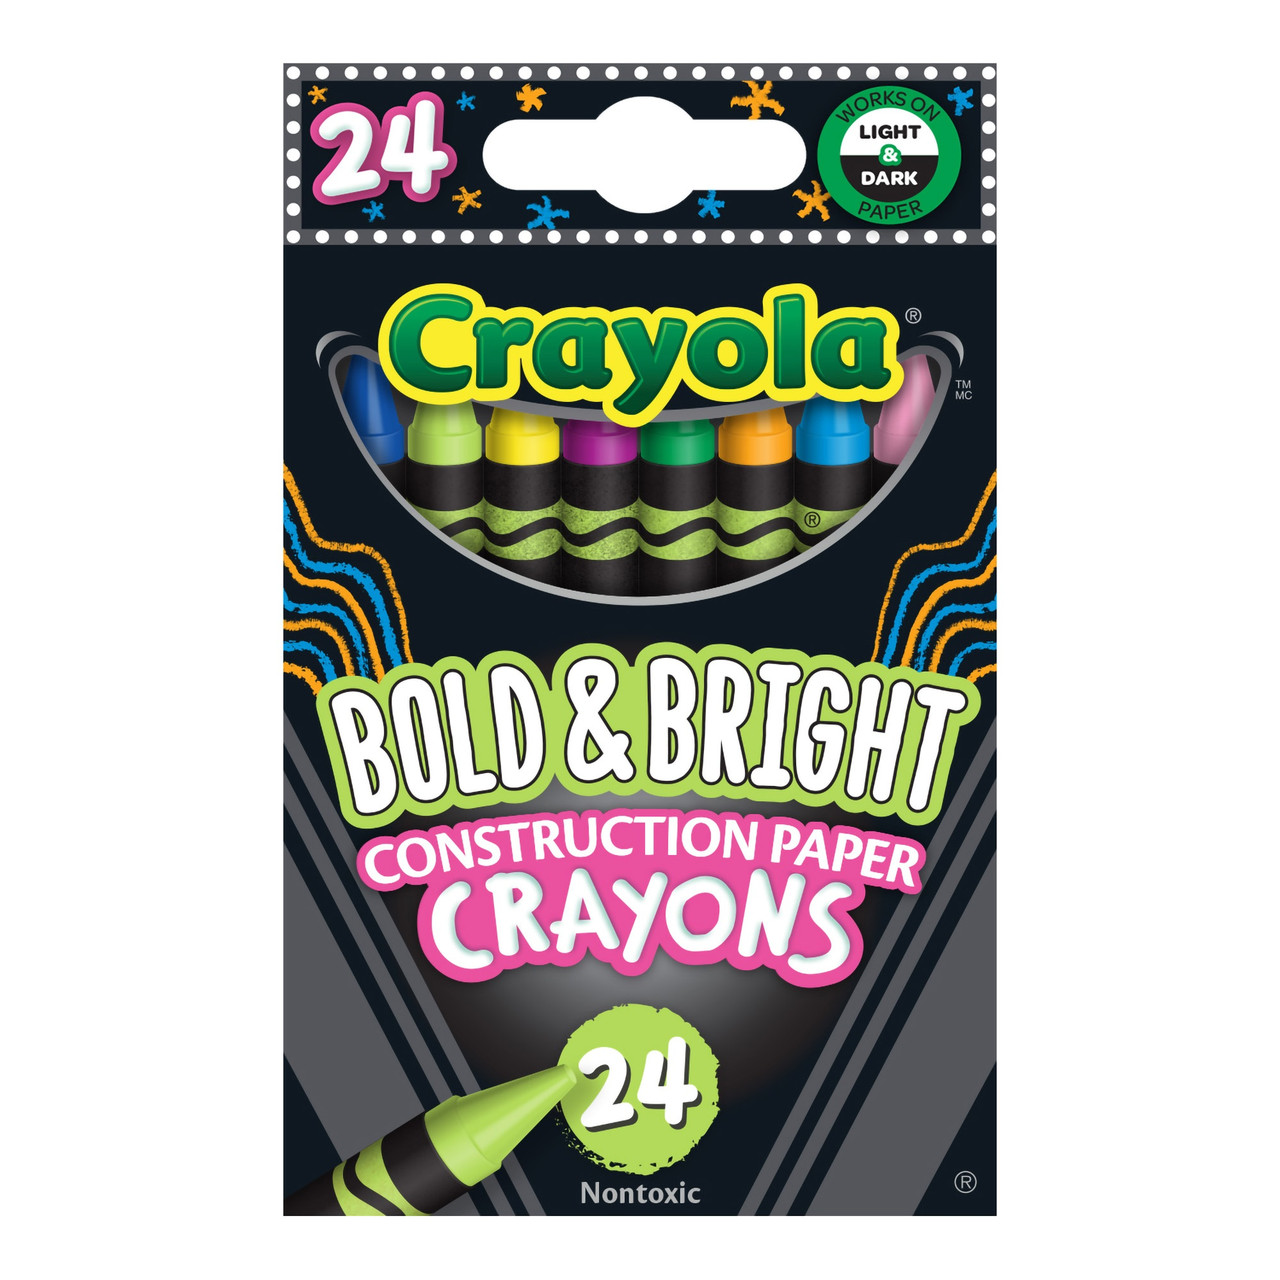 Crayola Glitter Crayons 24 Count Box